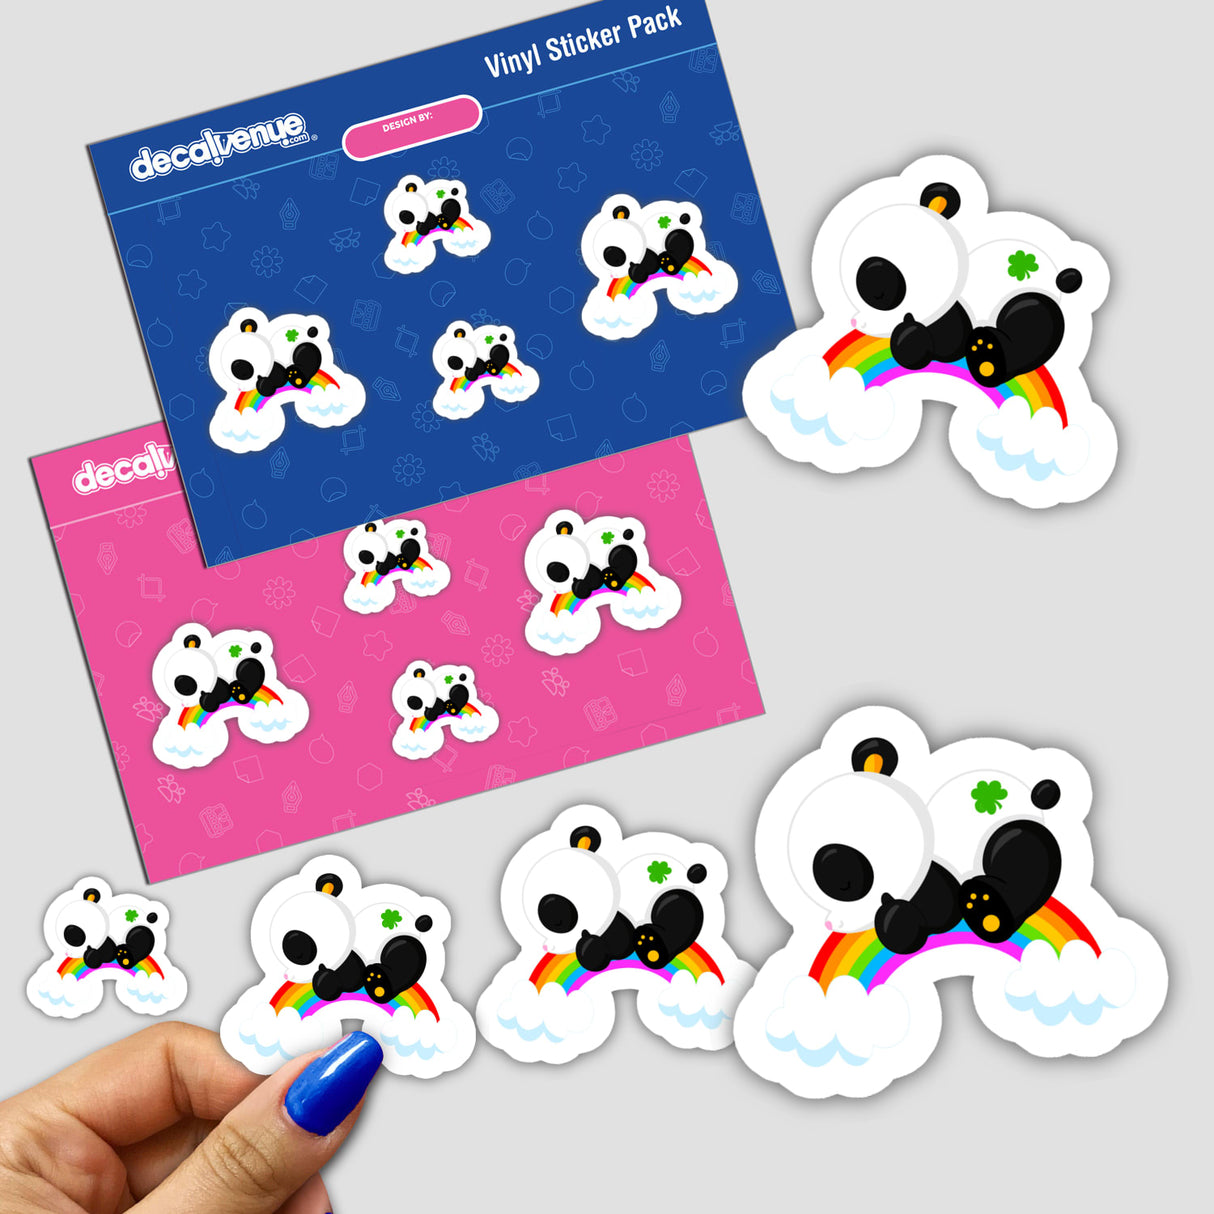 St Patrick's Day Panda on Rainbow Sticker